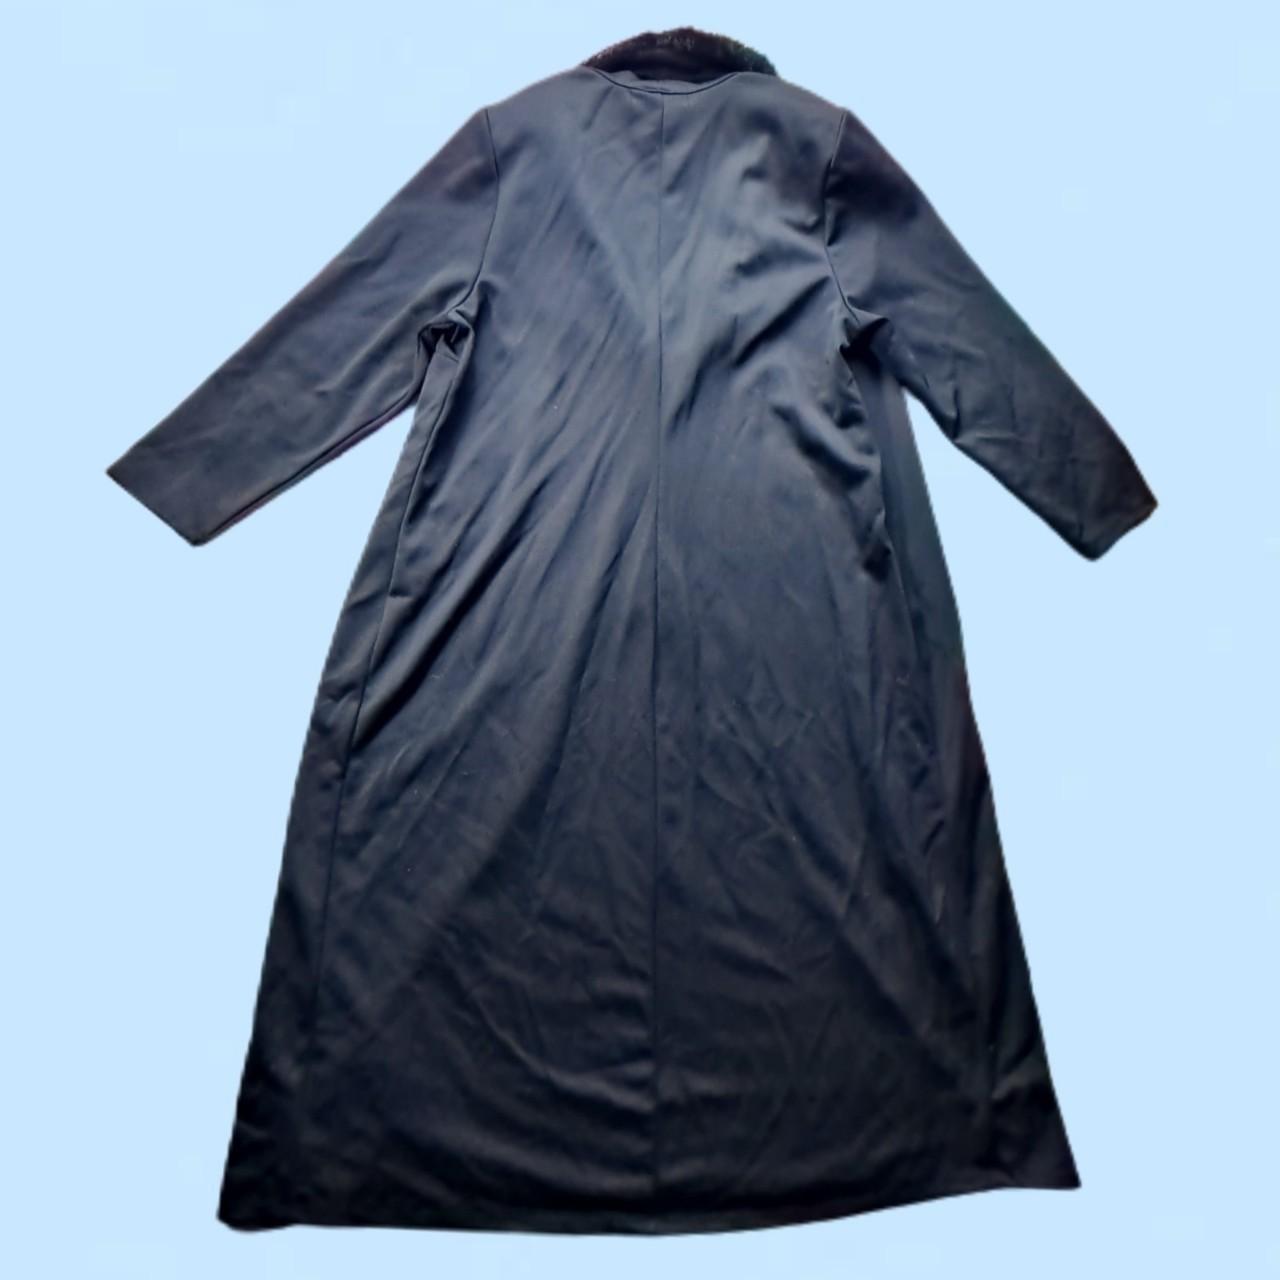 Product Image 3 - Vintage goth duster jacket!
Rare plus